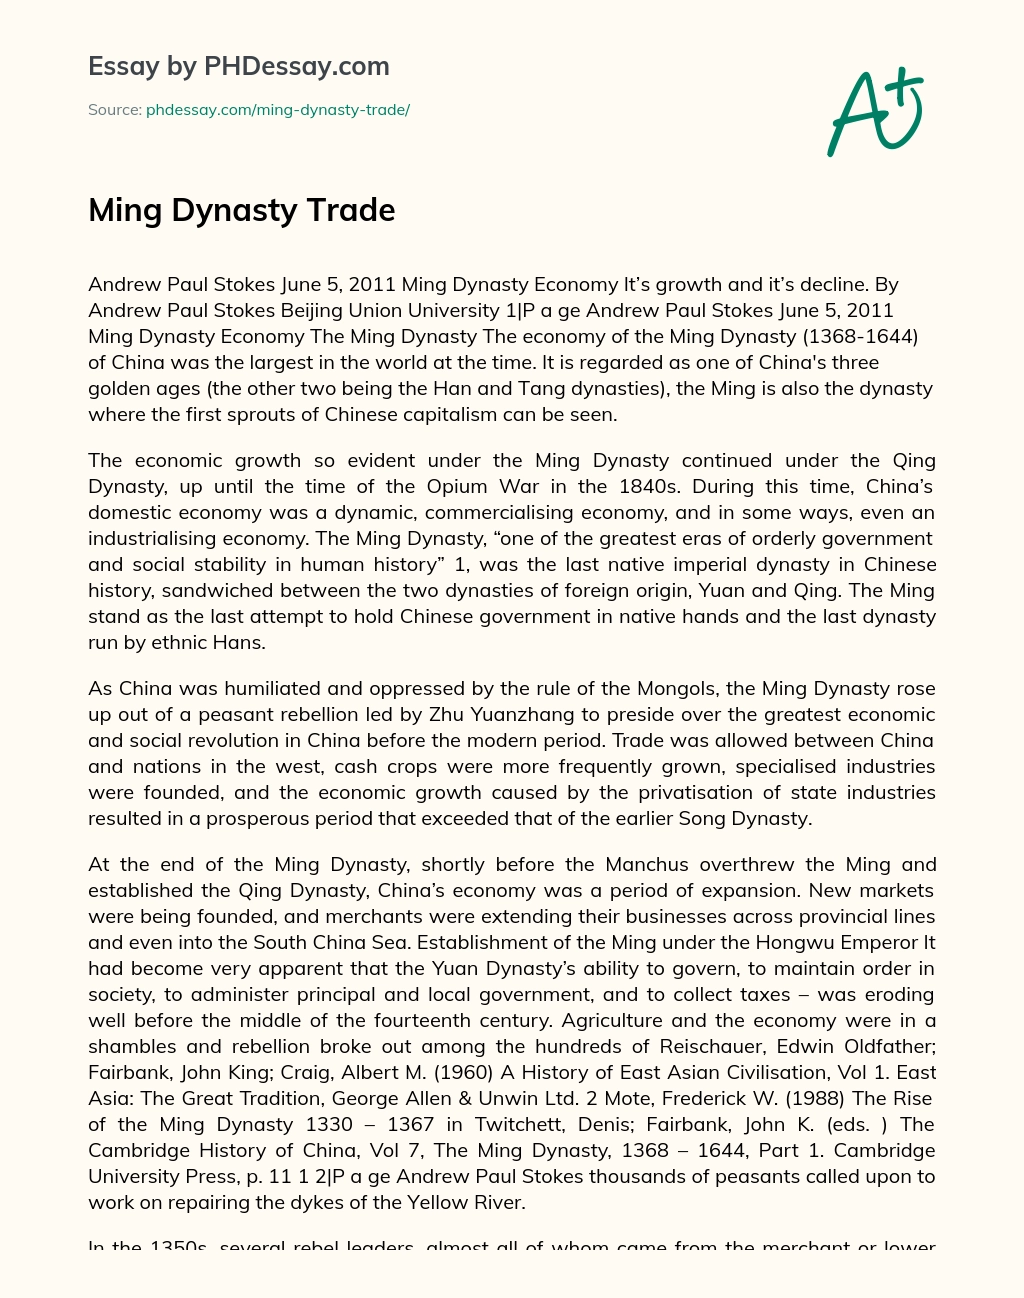 Ming Dynasty Trade essay